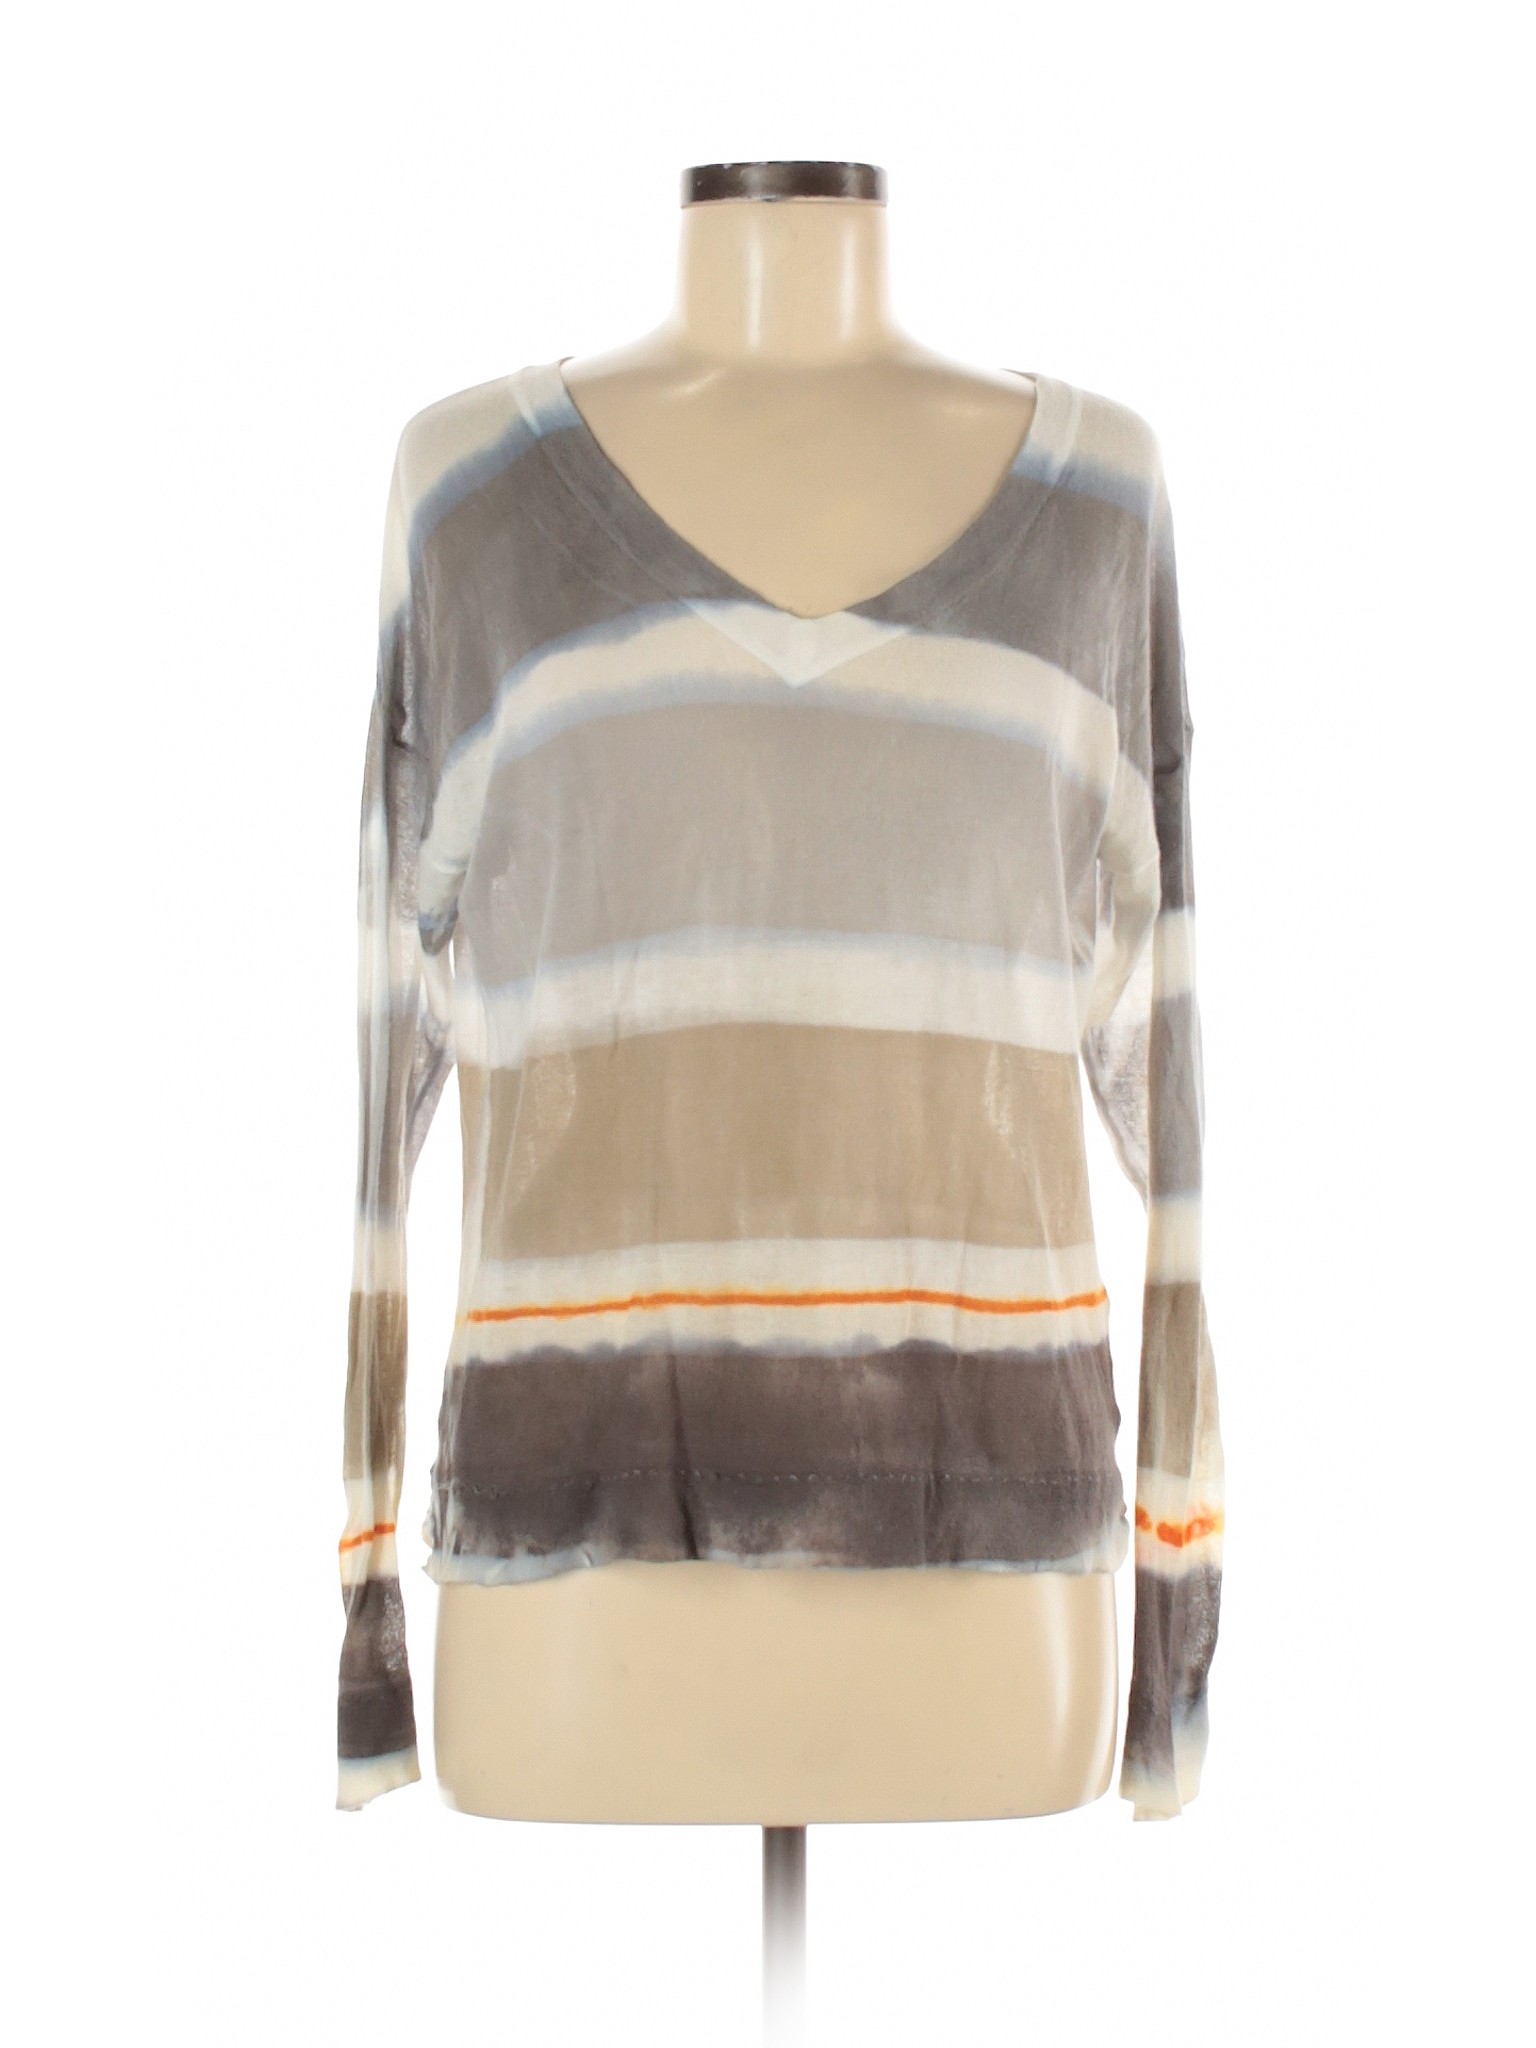 Marika Charles 100% Cotton Stripes Gray Long Sleeve Top Size Med (2 ...